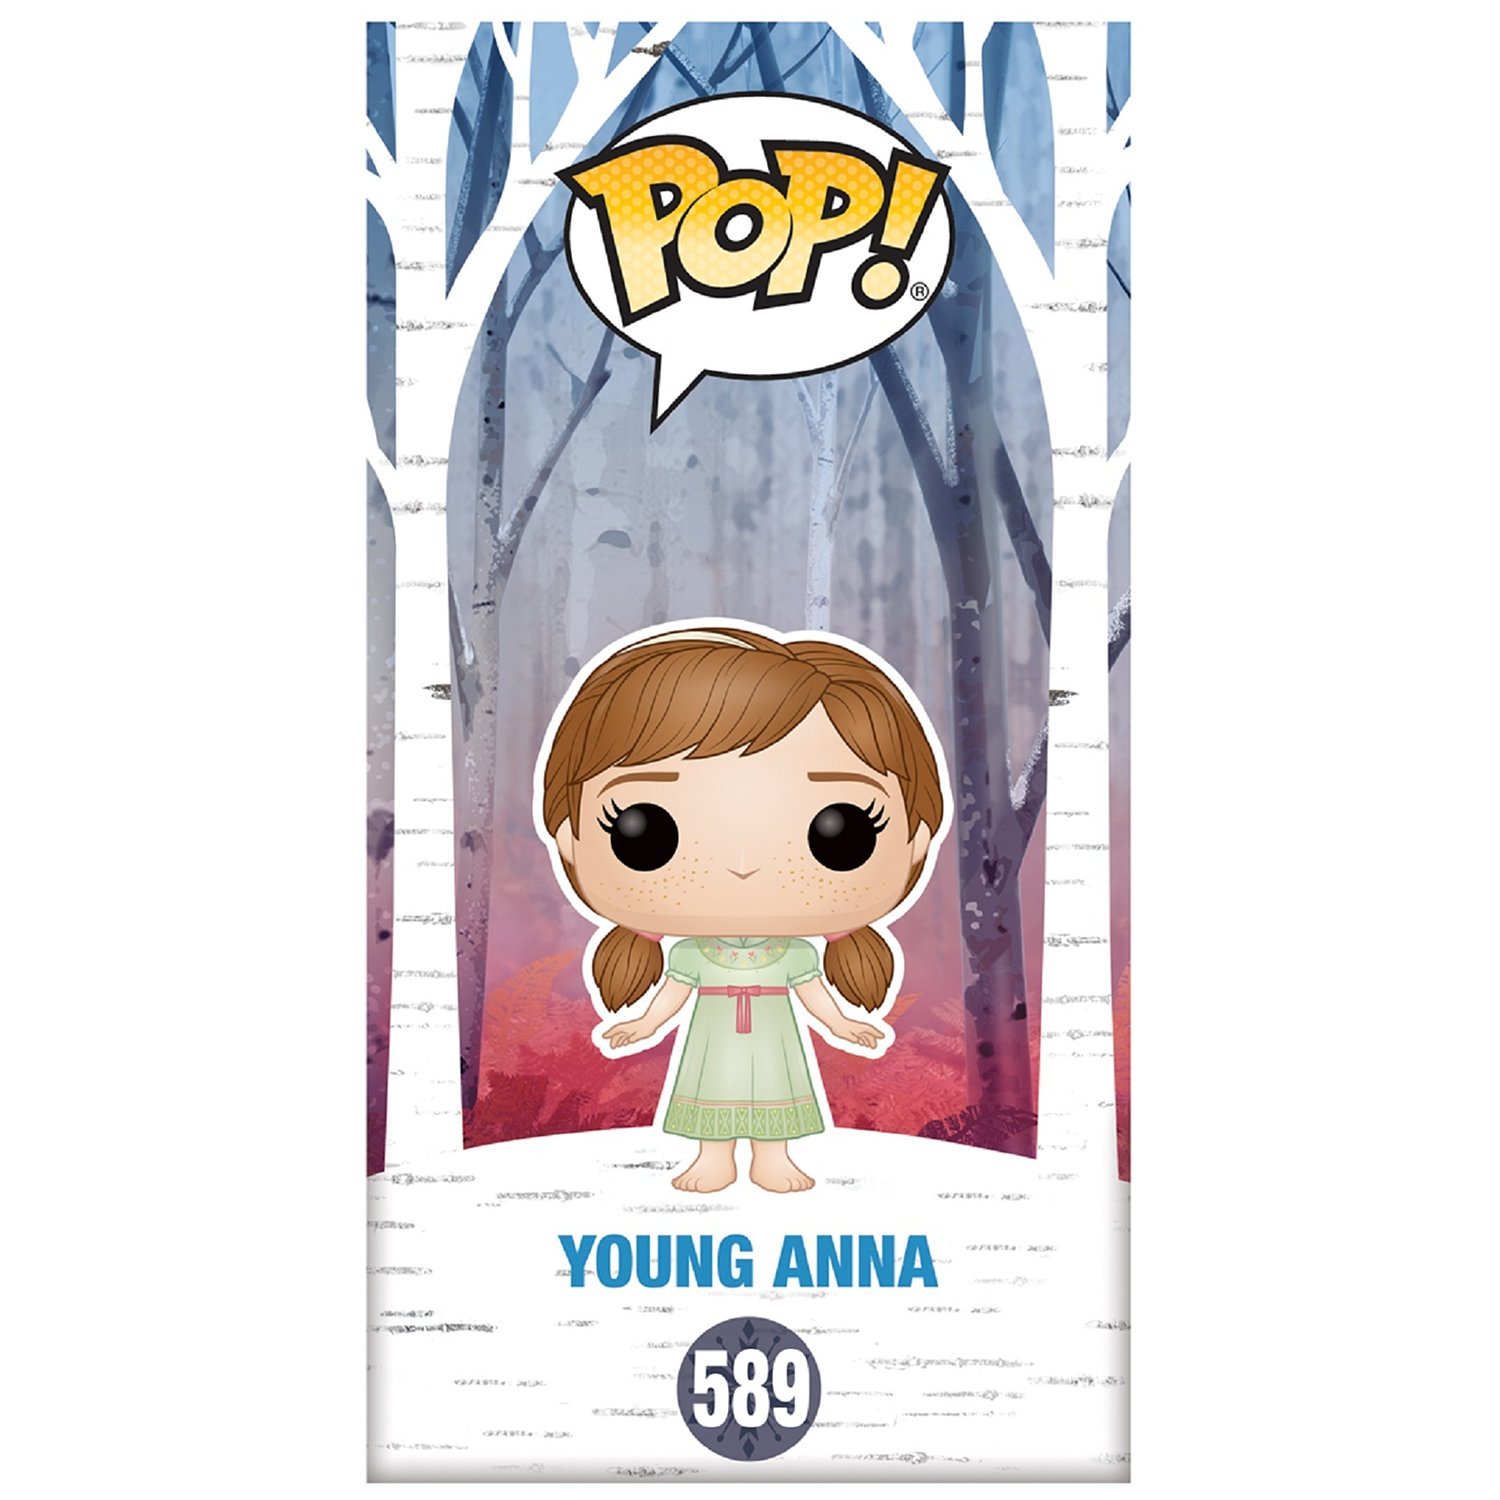 Игрушка Funko Pop Disney Frozen 2 Young Anna Fun254937